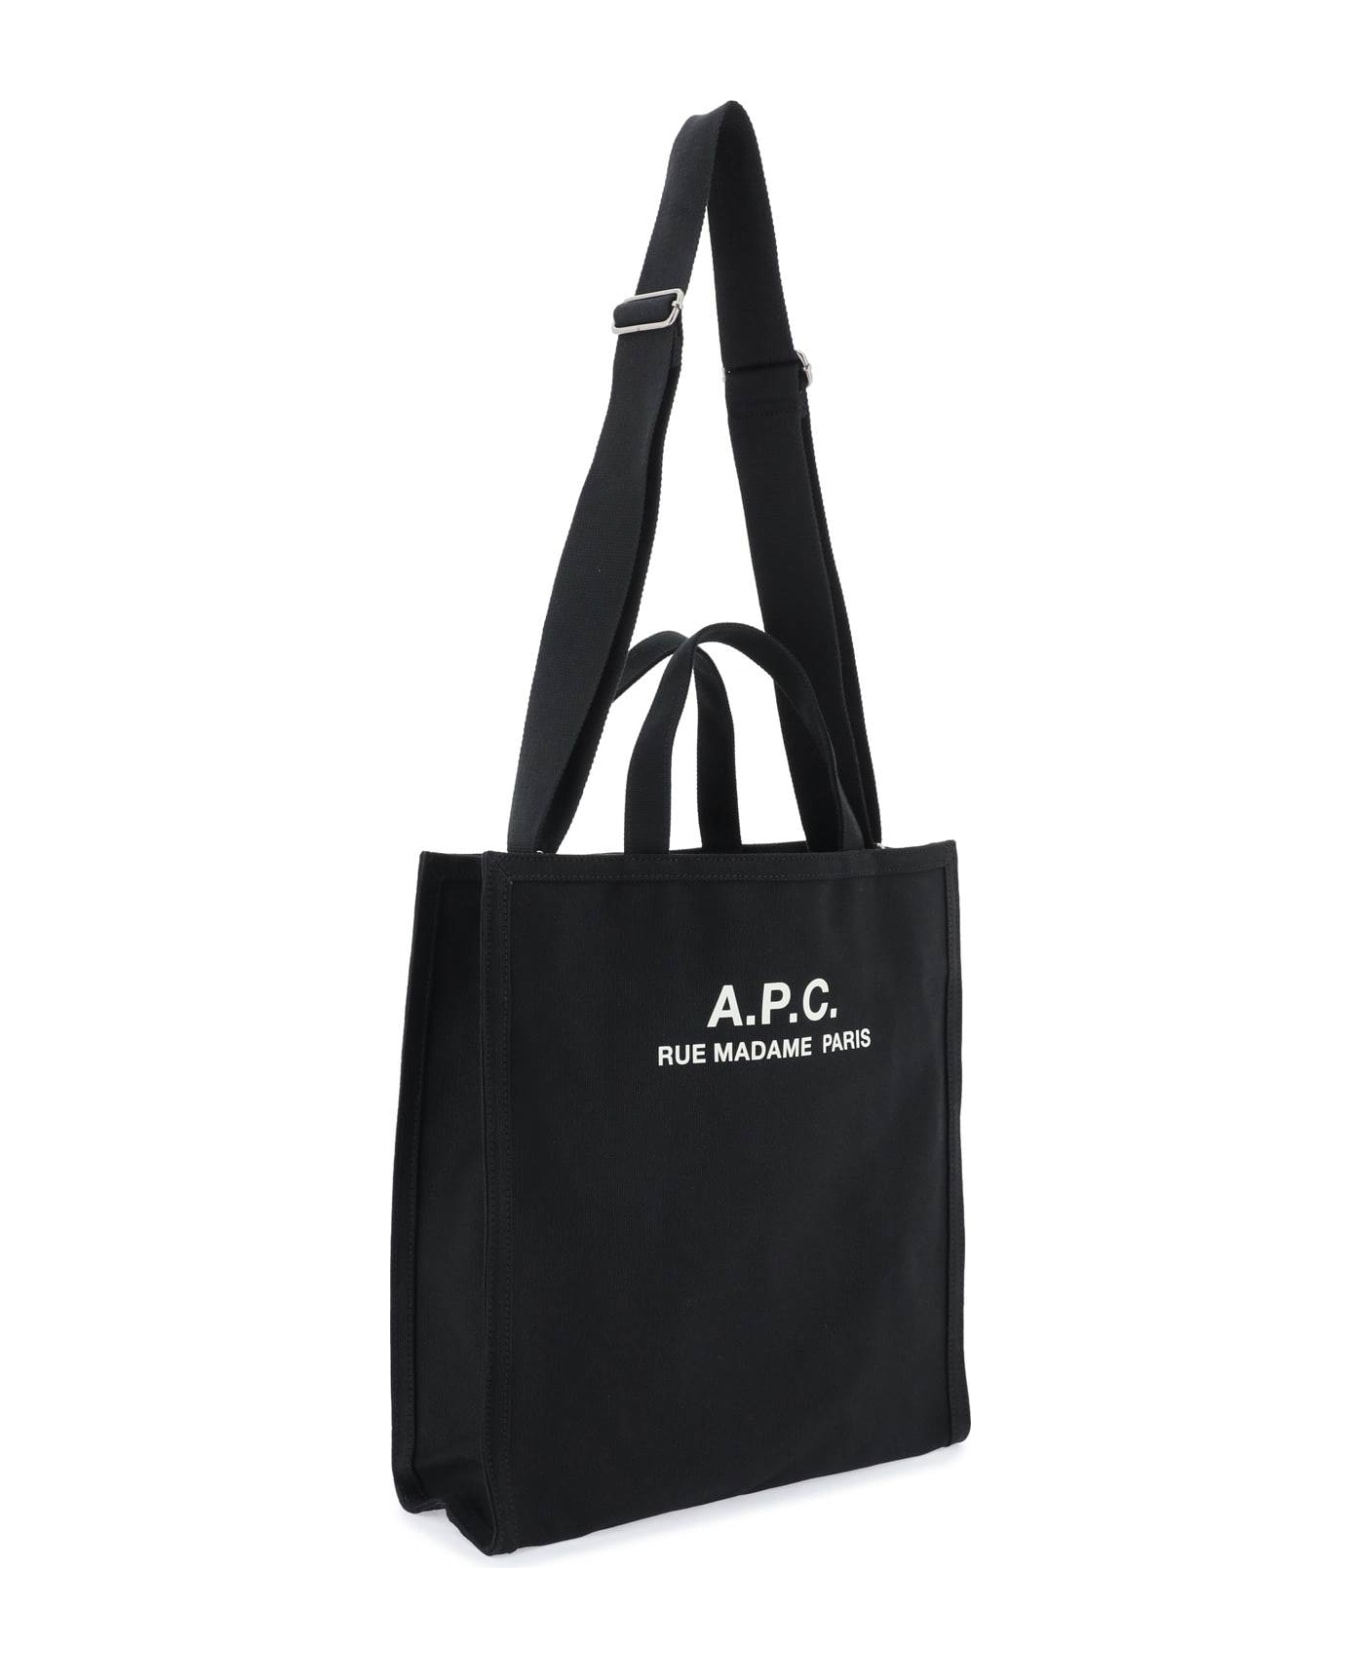 A.P.C. Recuperation Canvas Shopping Bag - NOIR (Black)